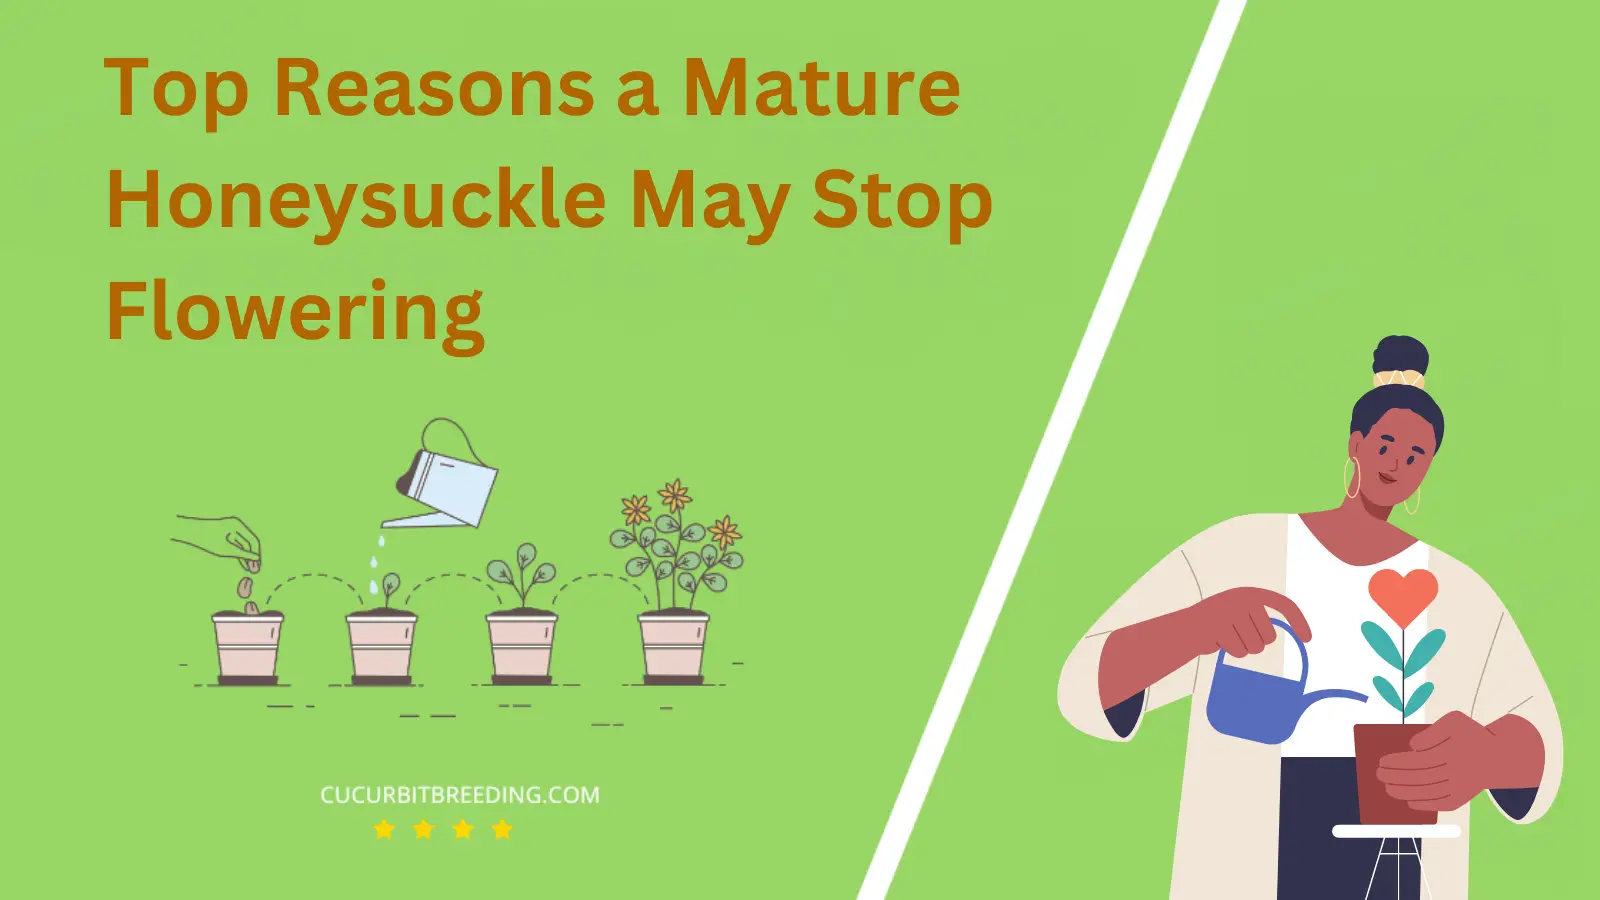 Top Reasons a Mature Honeysuckle May Stop Flowering